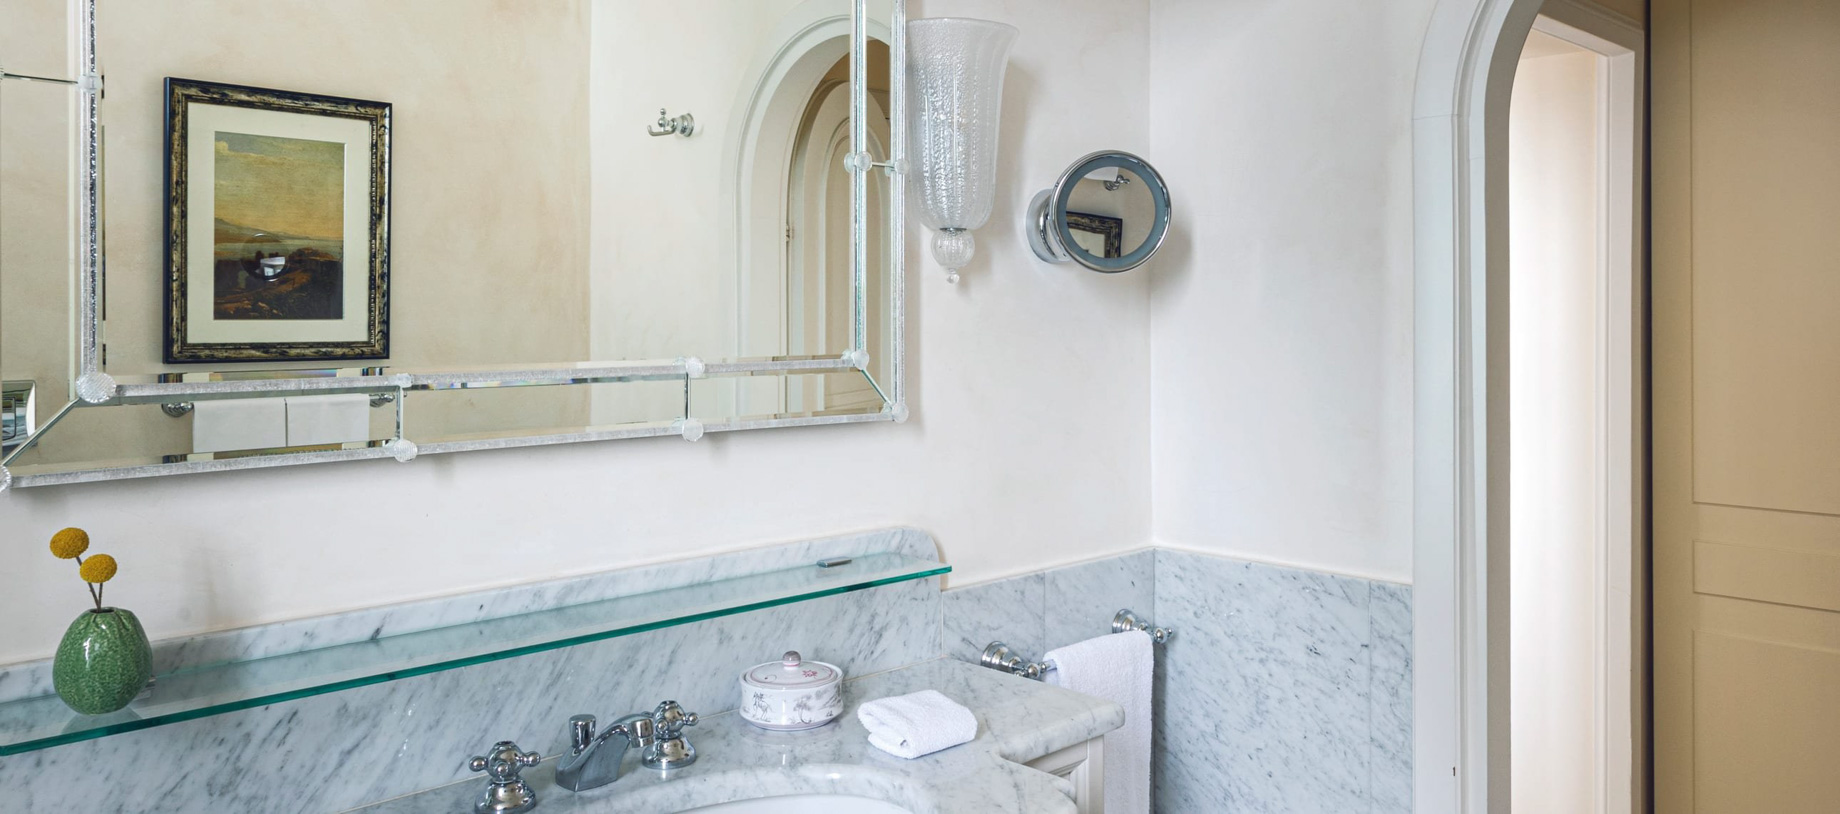 109 – Grand Hotel Timeo, A Belmond Hotel – Taormina, Italy – Bathroom